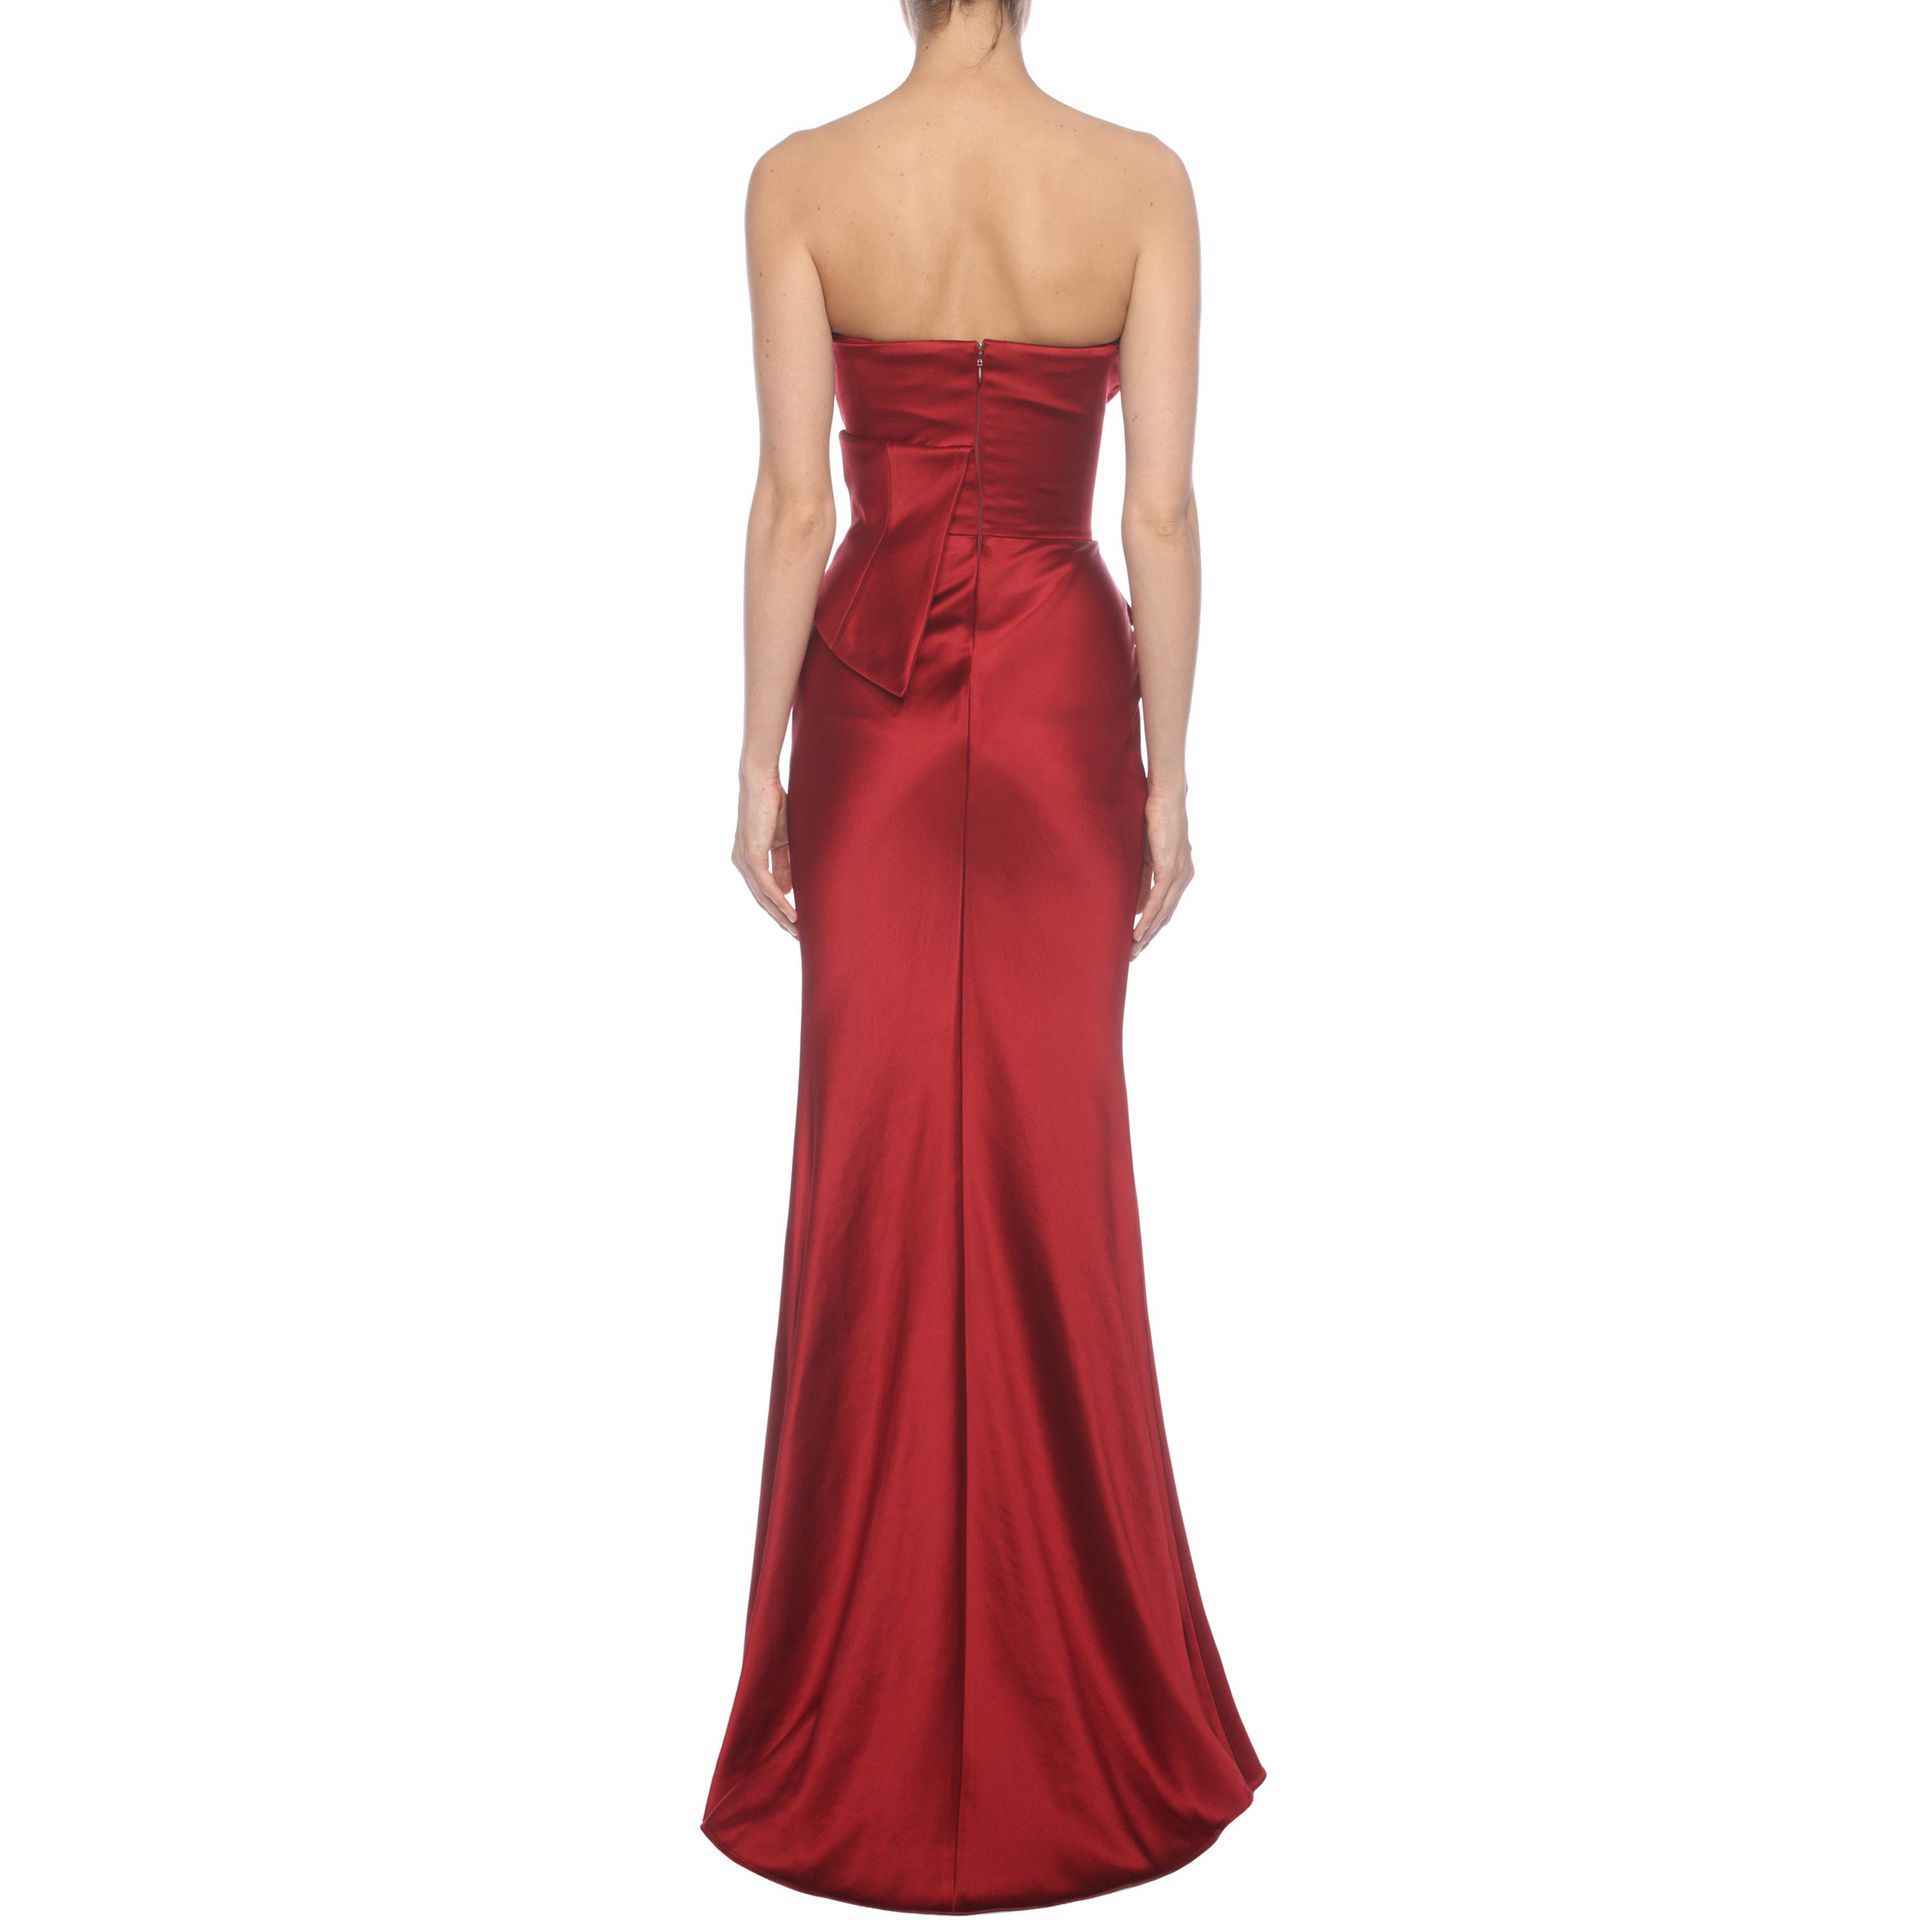 Alexander McQueen Satin Long Bow Bustier Dress in Deep Red (Red) - Lyst